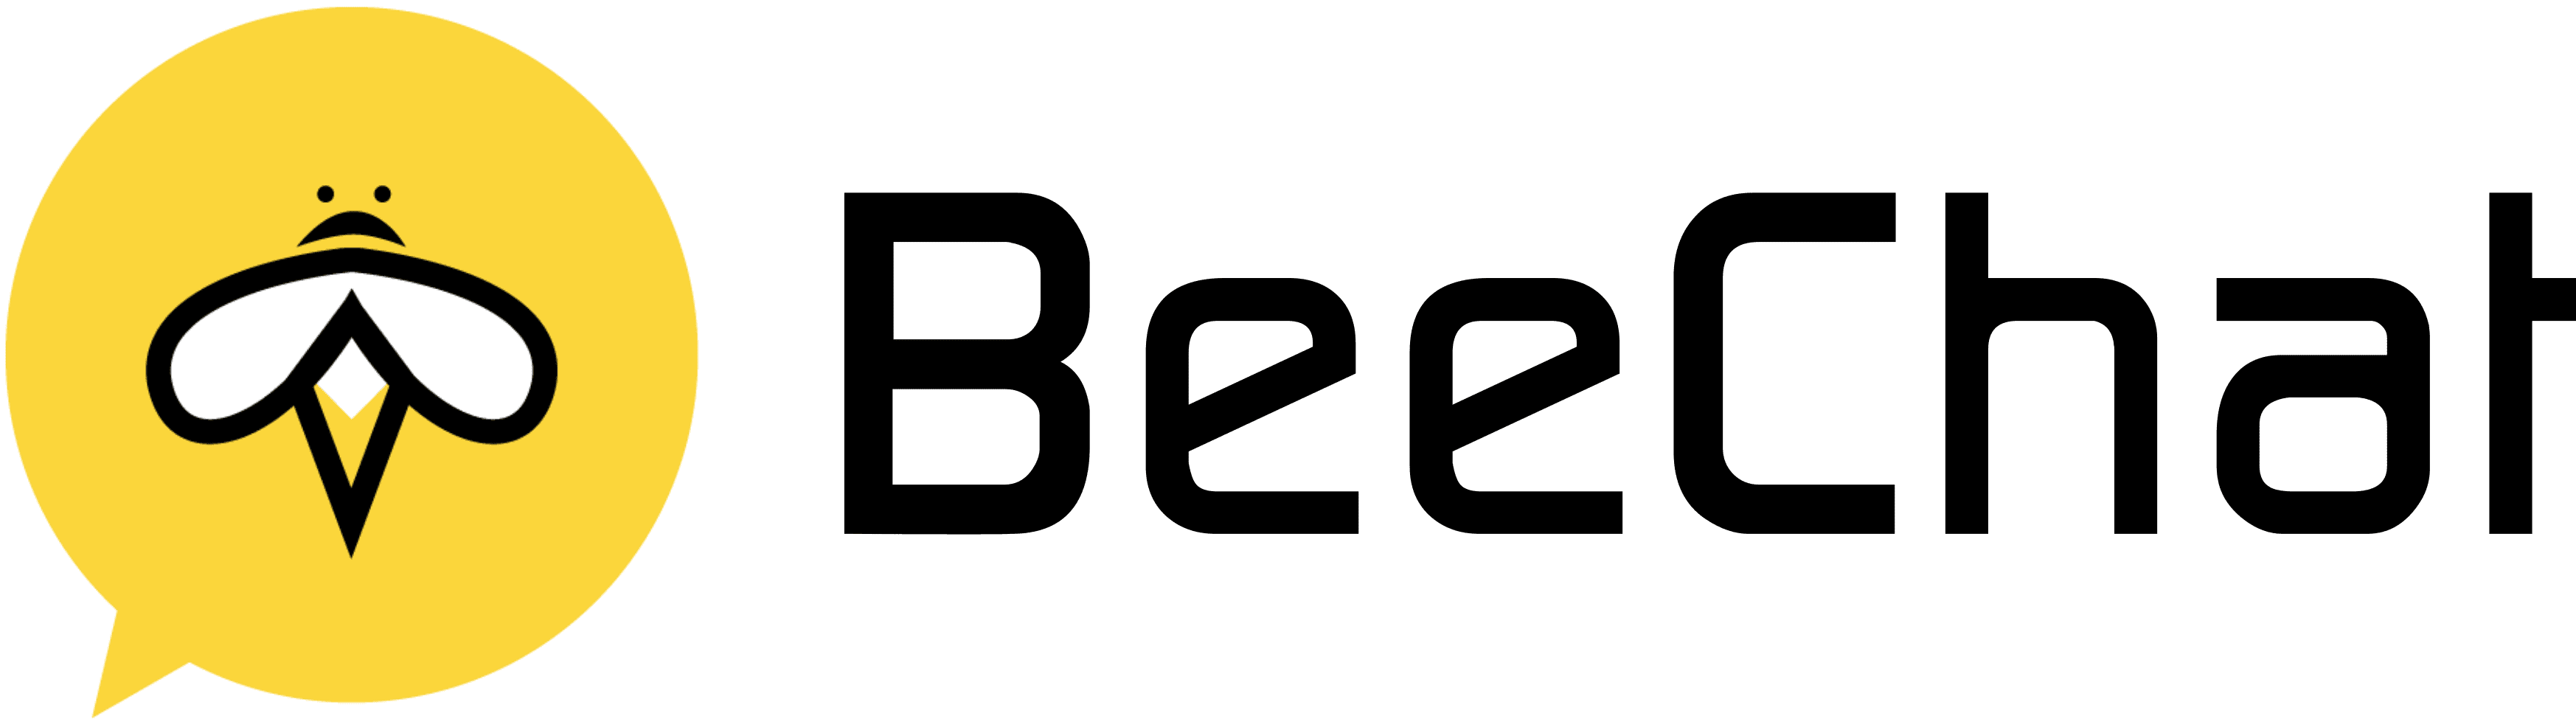 BeeChat Logo